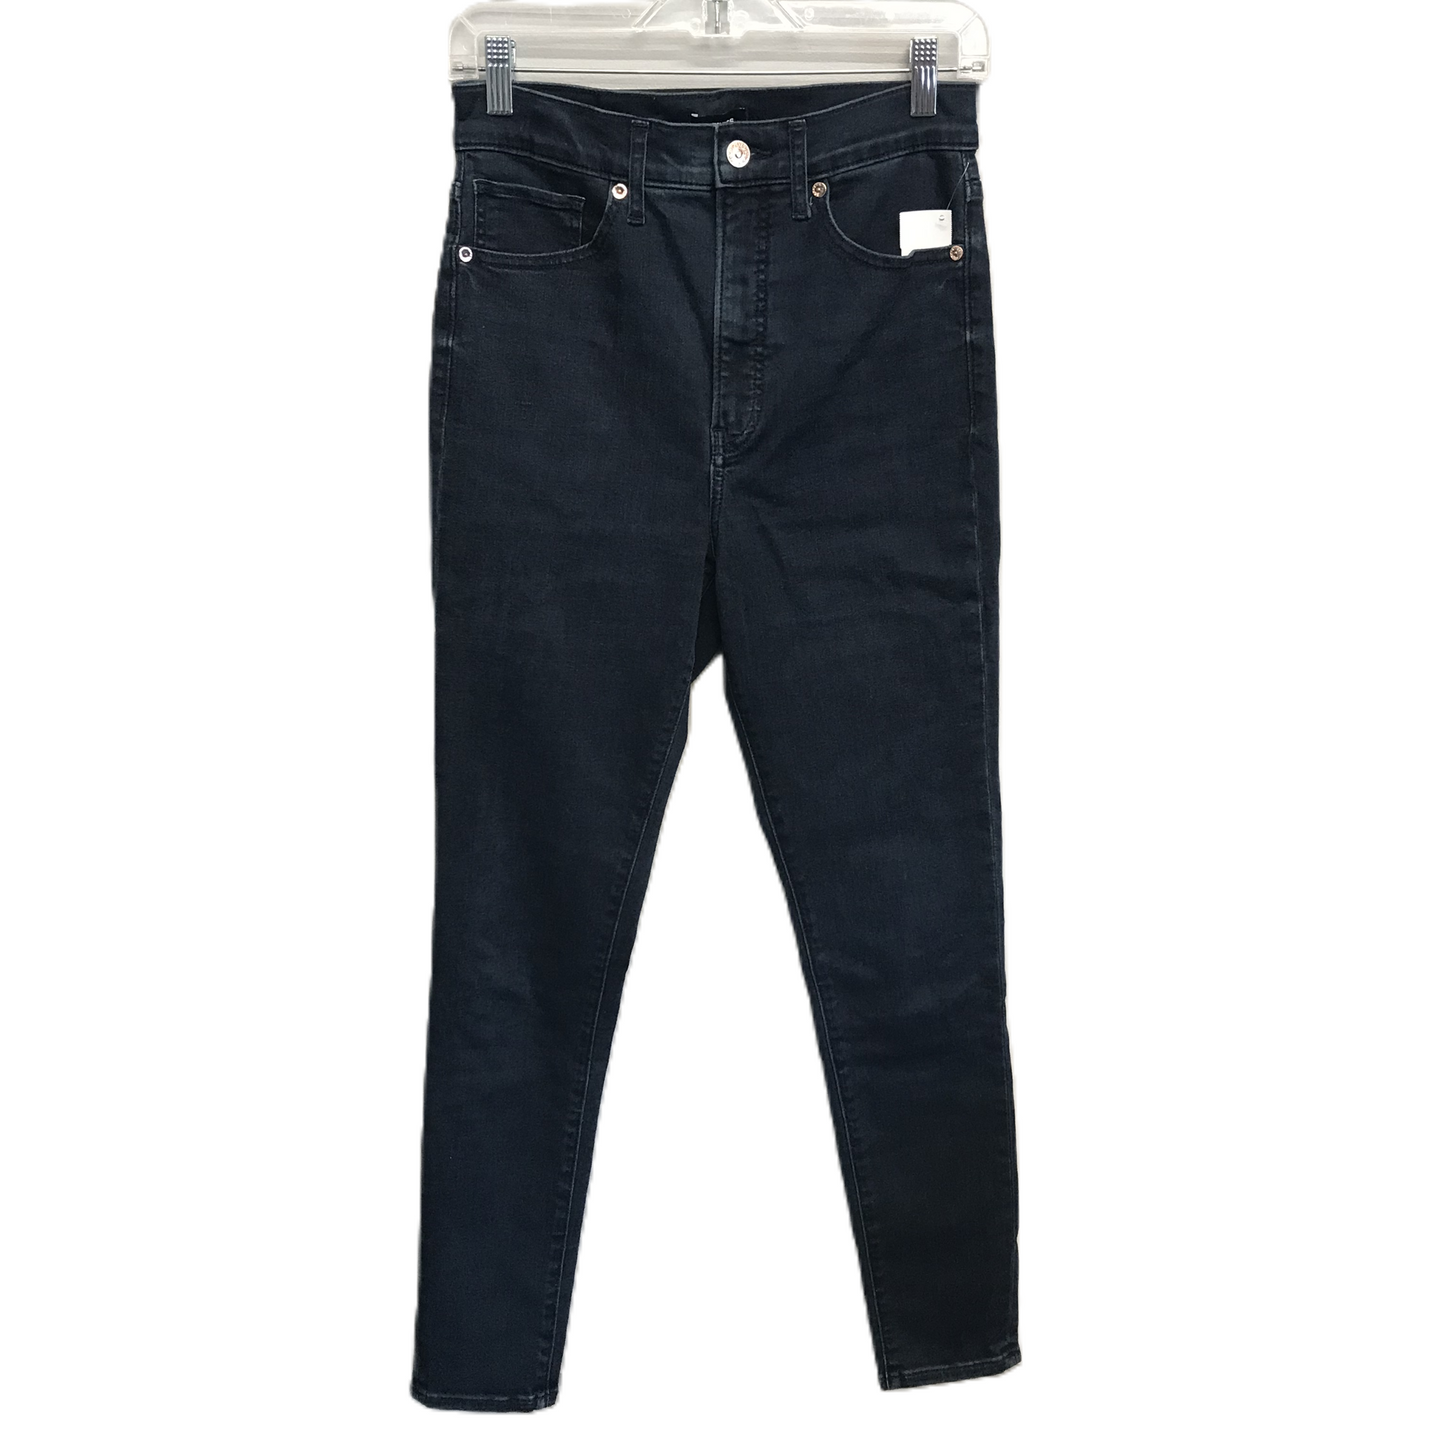 Blue Denim Jeans Skinny By Express, Size: 6